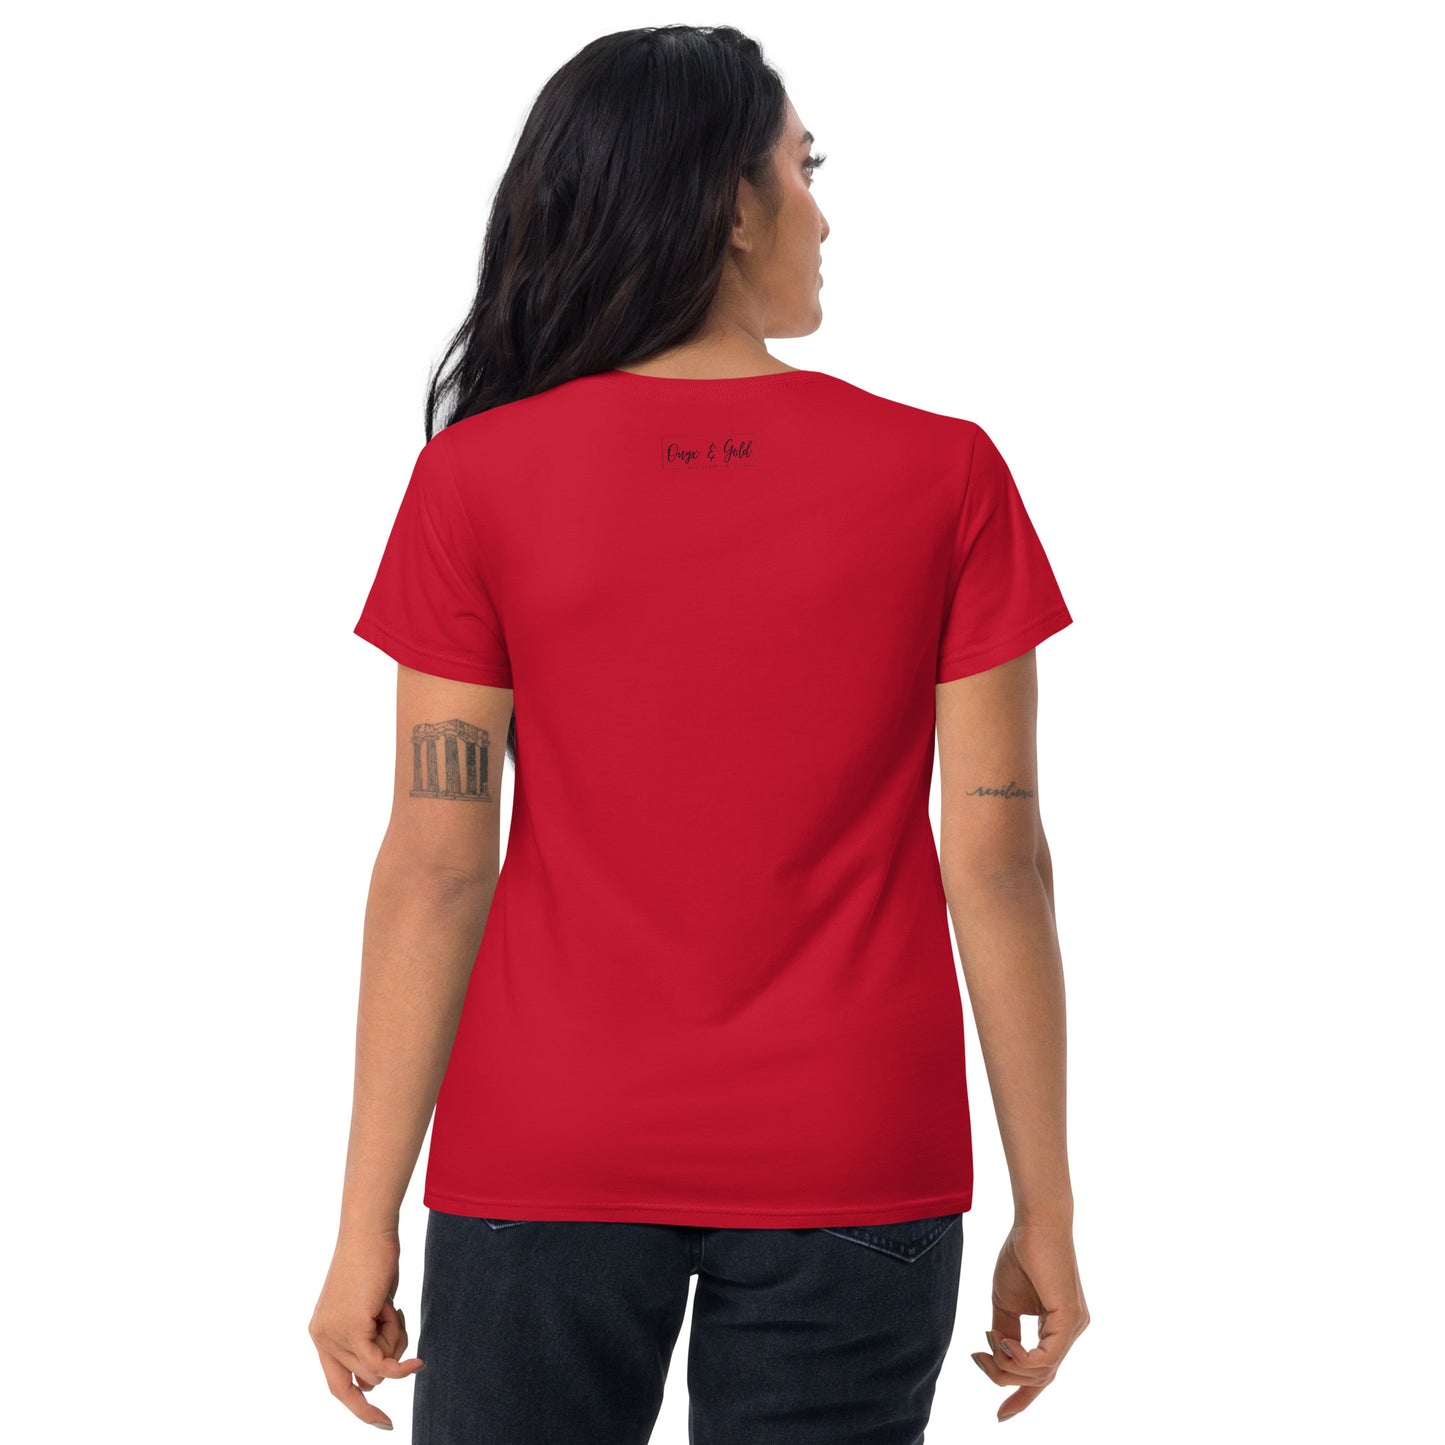 Onyx & Gold -Women's Fashion Fit T-Shirt | Gildan 880 - Black Logo with logo on back